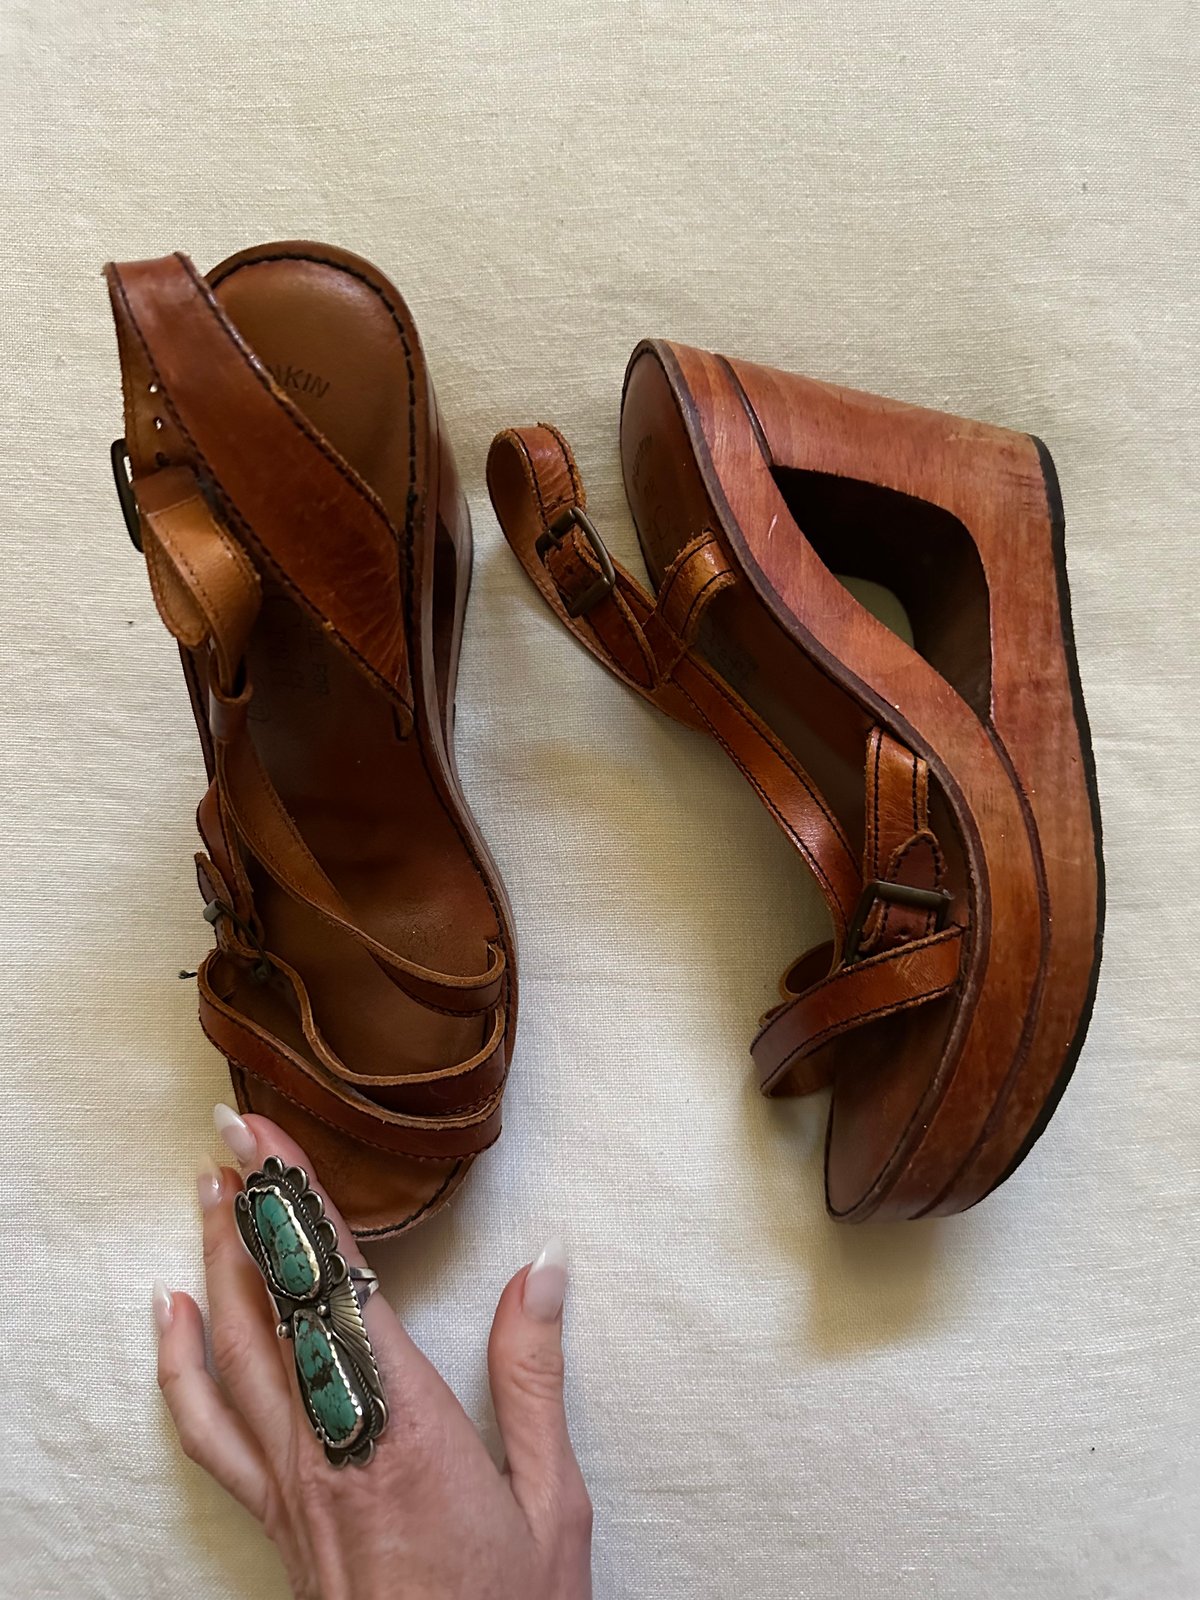 Vintage Women's Shoes Stacked Wooden Heels Platform Tan 5 1/2 B Sandals 70's  | eBay